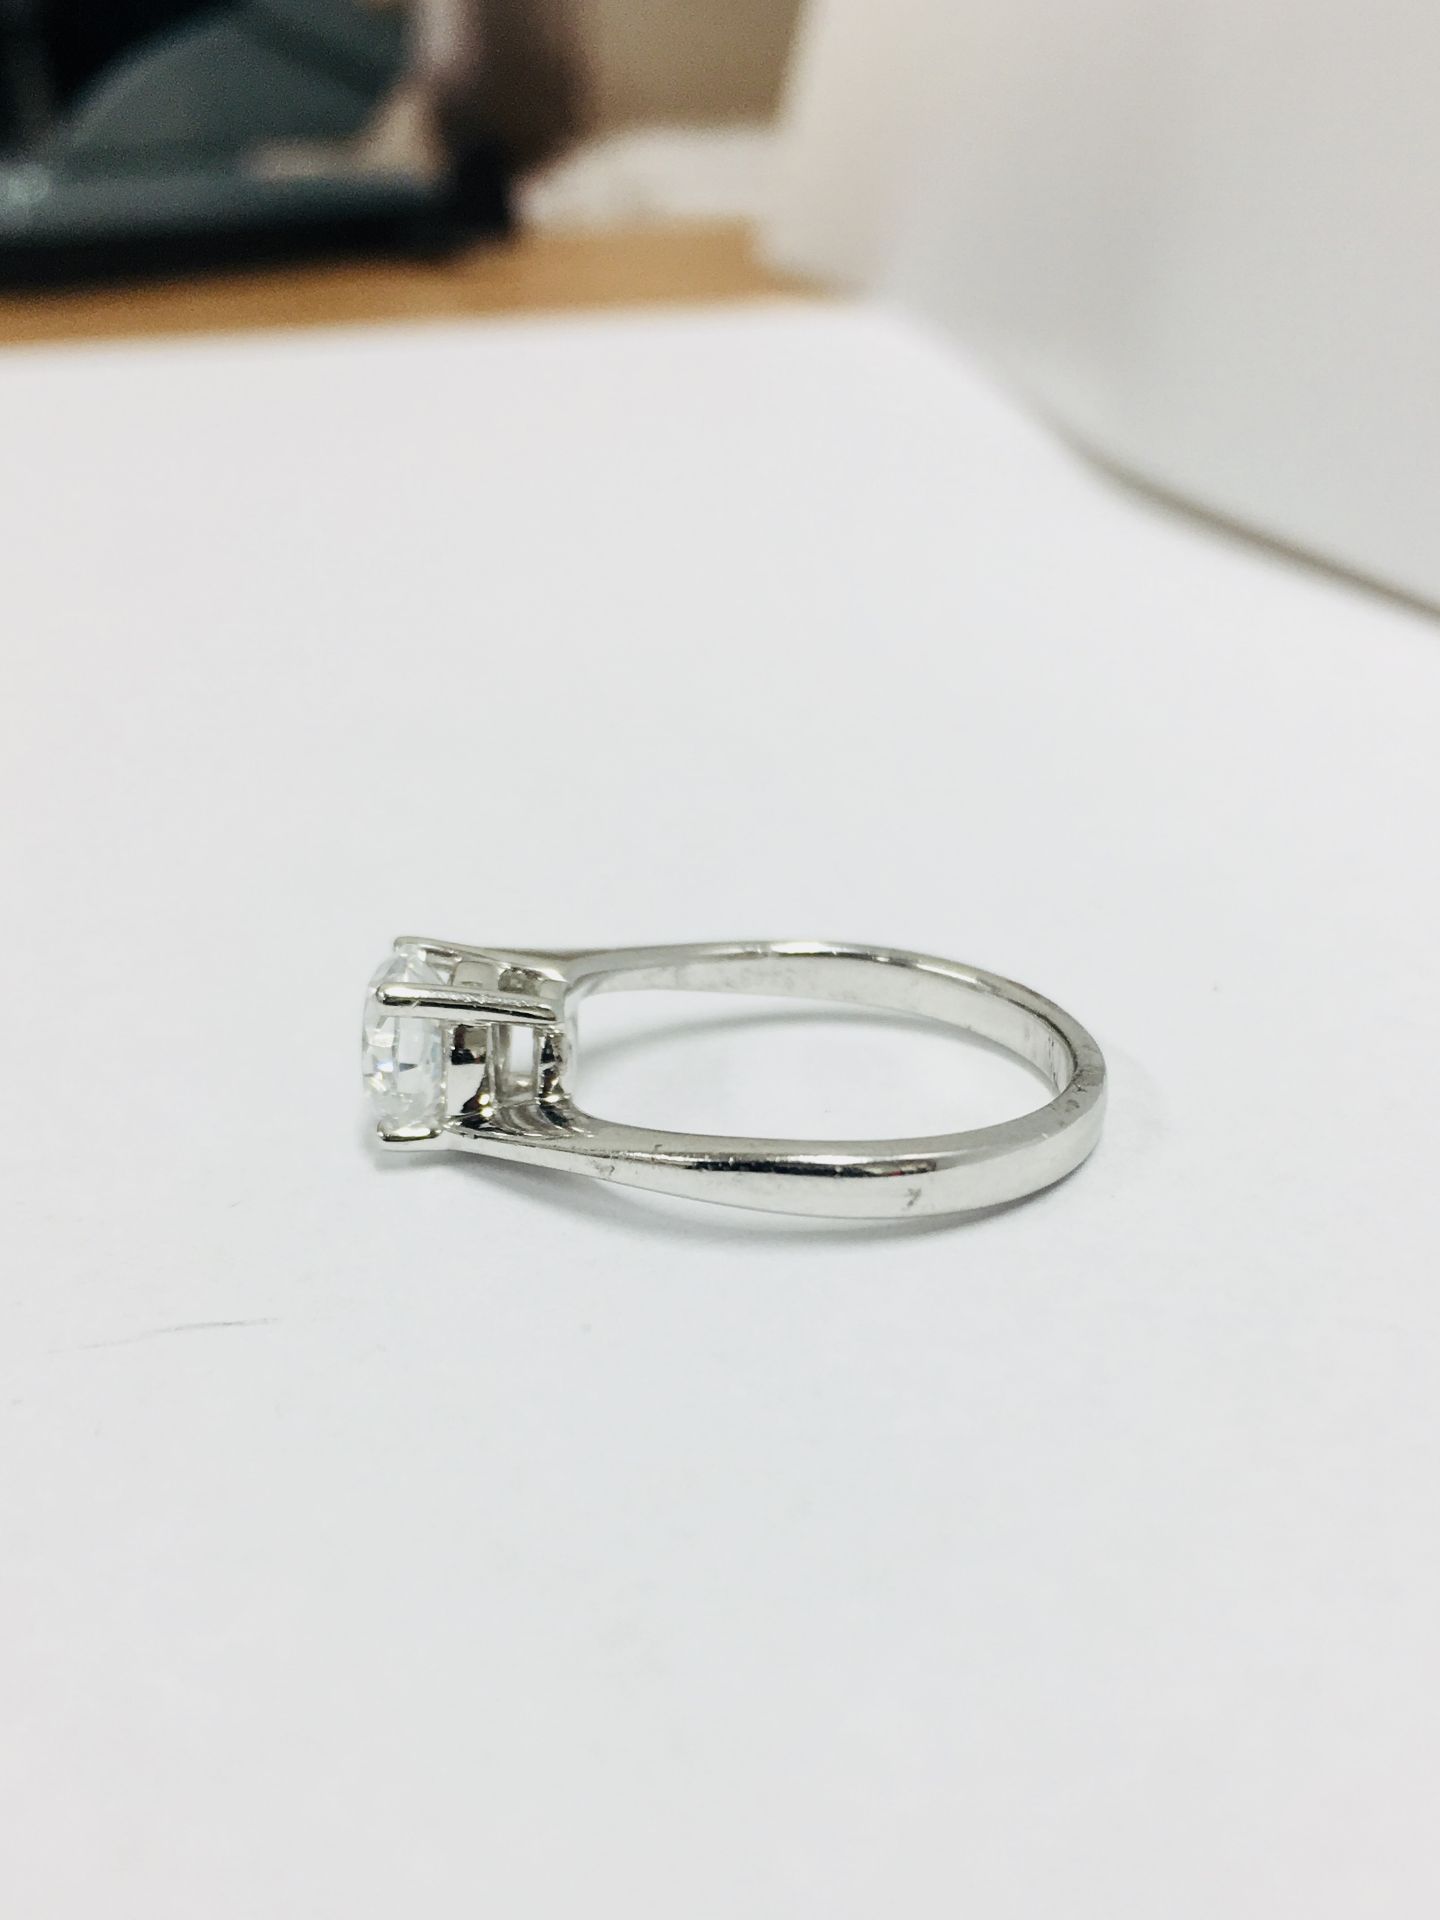 platinum twist solitaire ring,0.50ct brilliant cut diamond vs clarity H colour(clarity enhanced), - Image 2 of 4